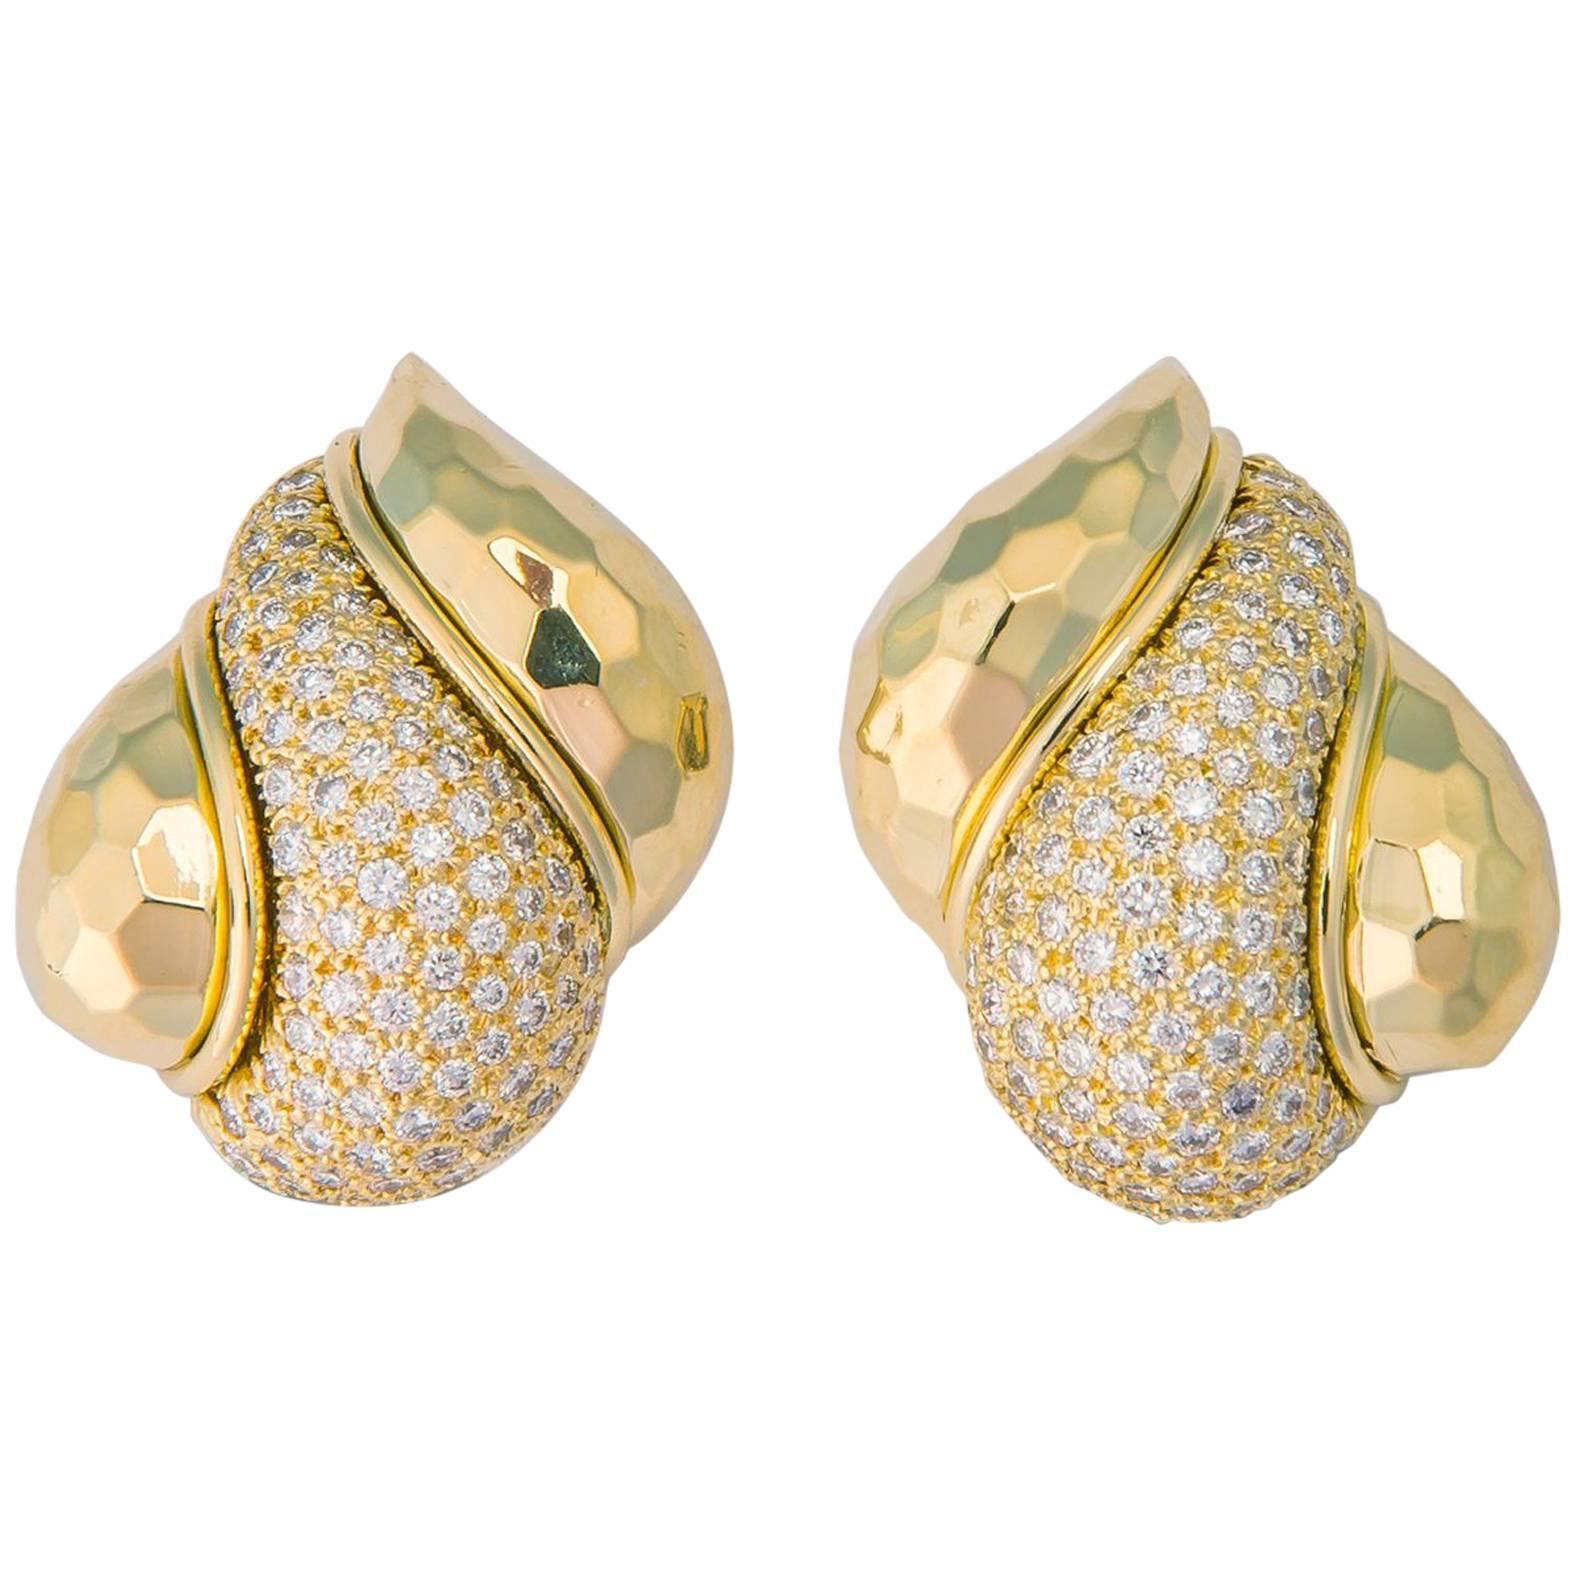 Henry Dunay Gold and Diamond Earrings